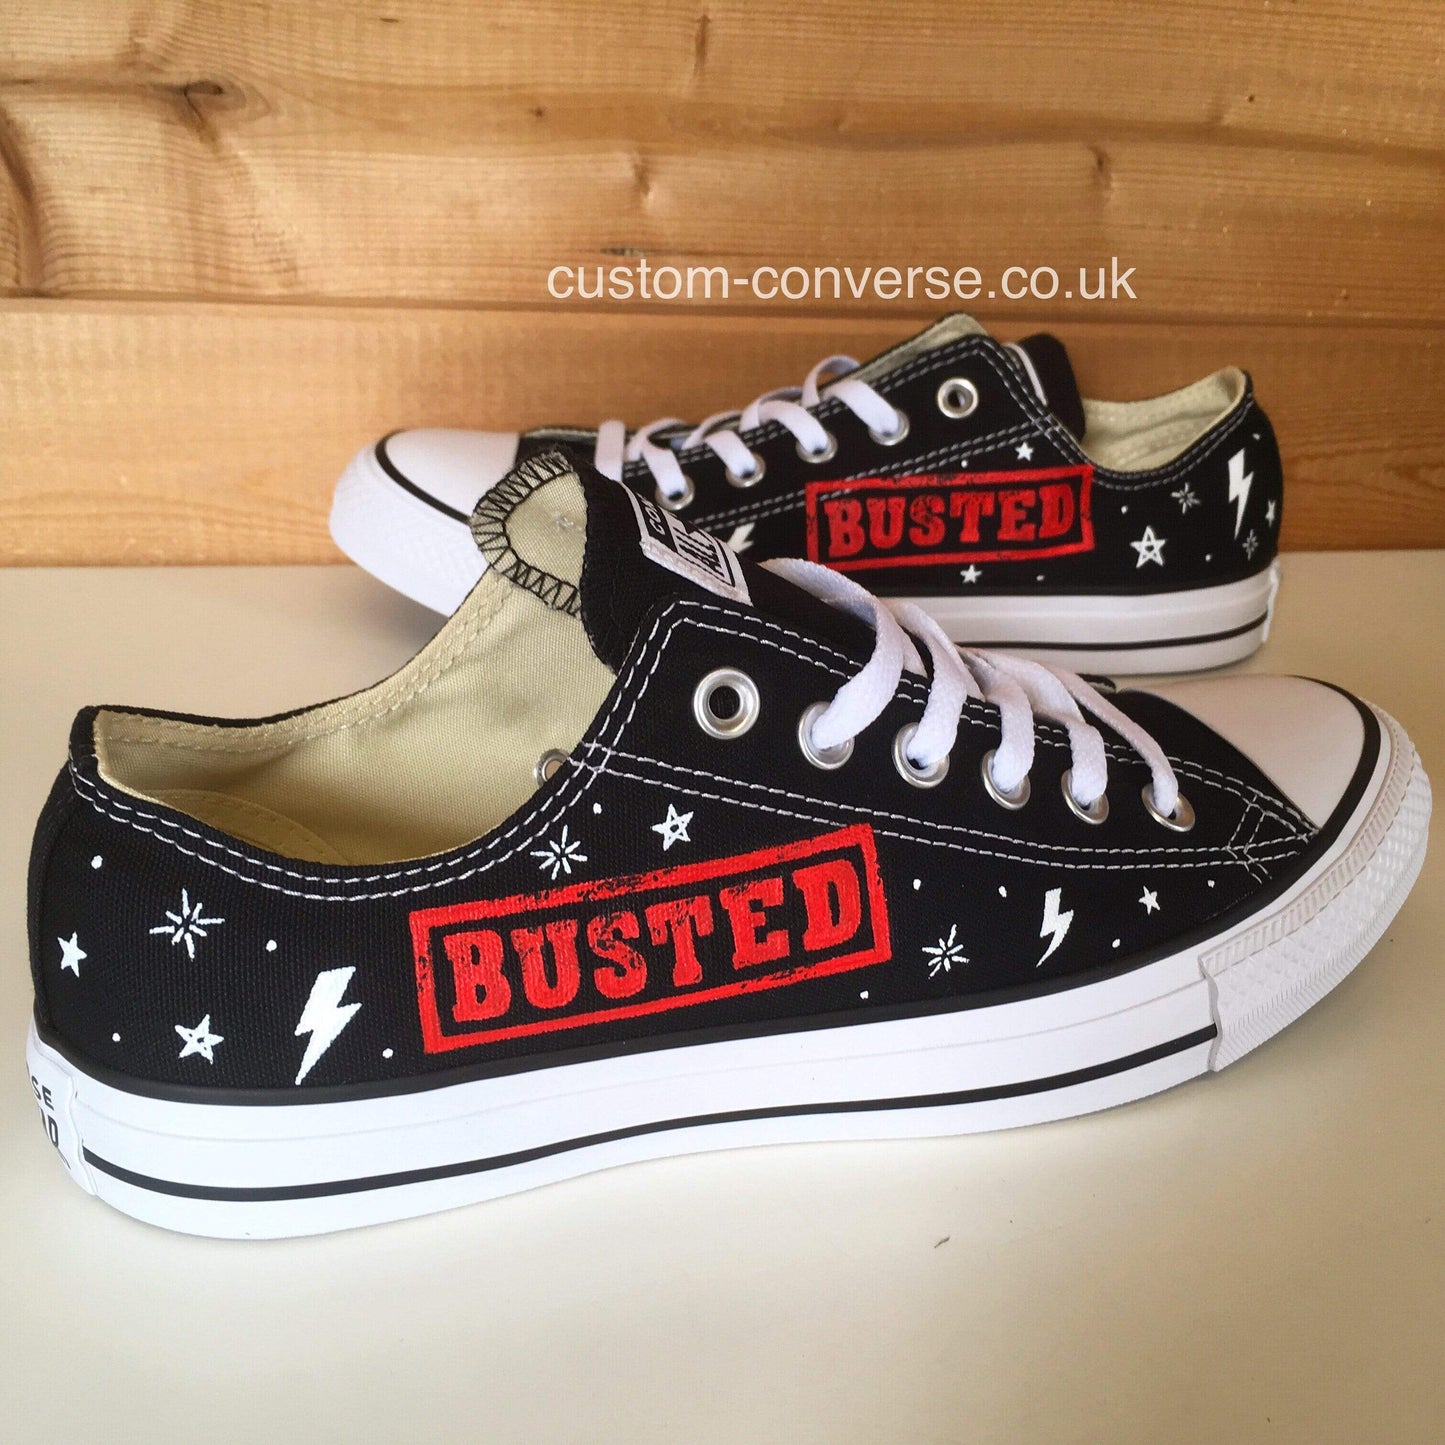 Busted - Custom Converse Ltd.